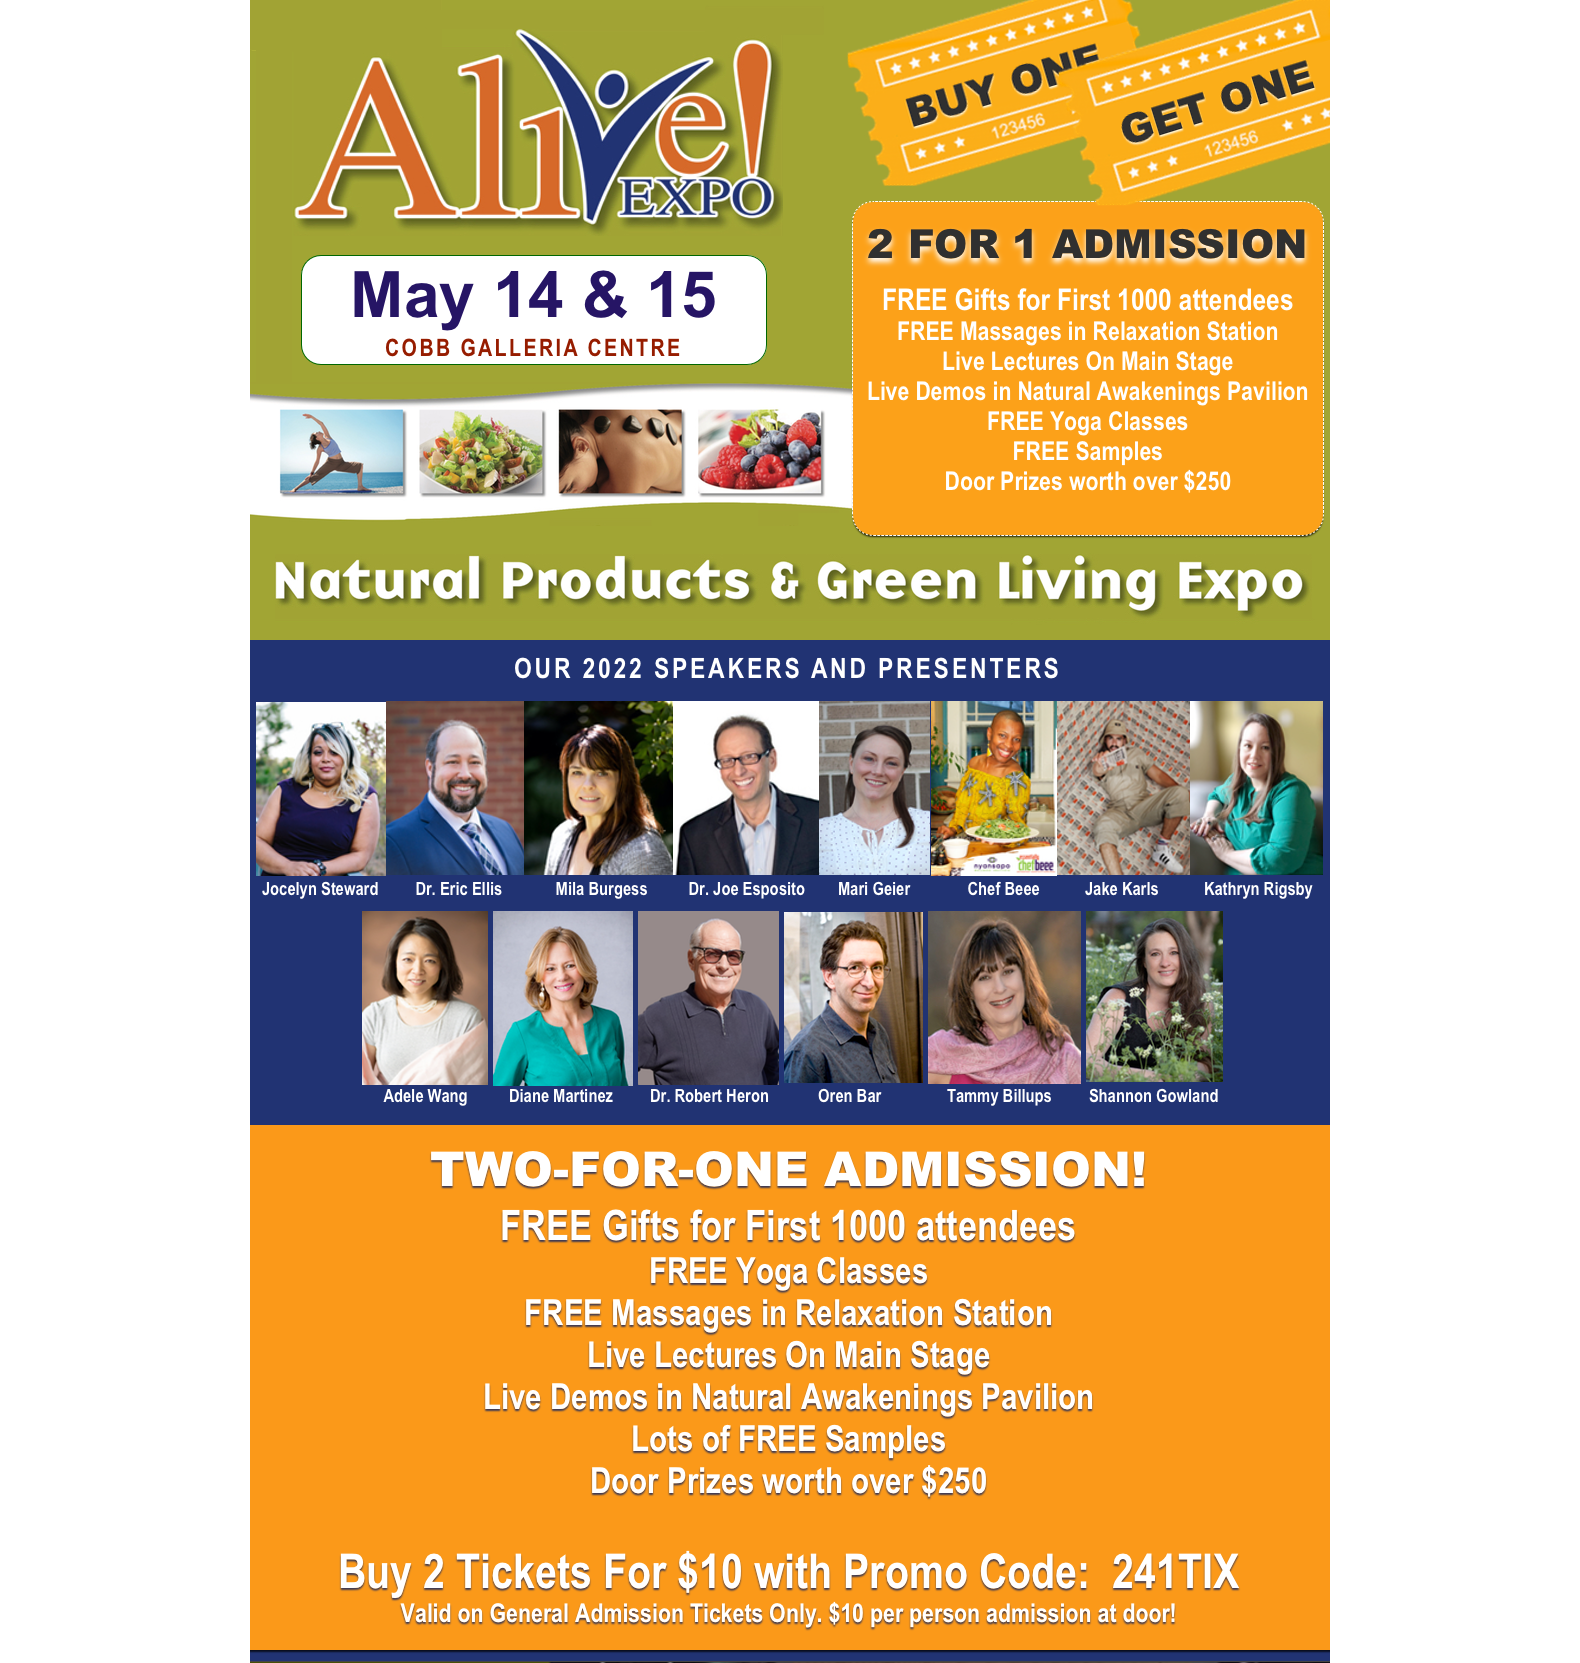 17th Annual Alive! Expo, Atlanta, May 14 & 15